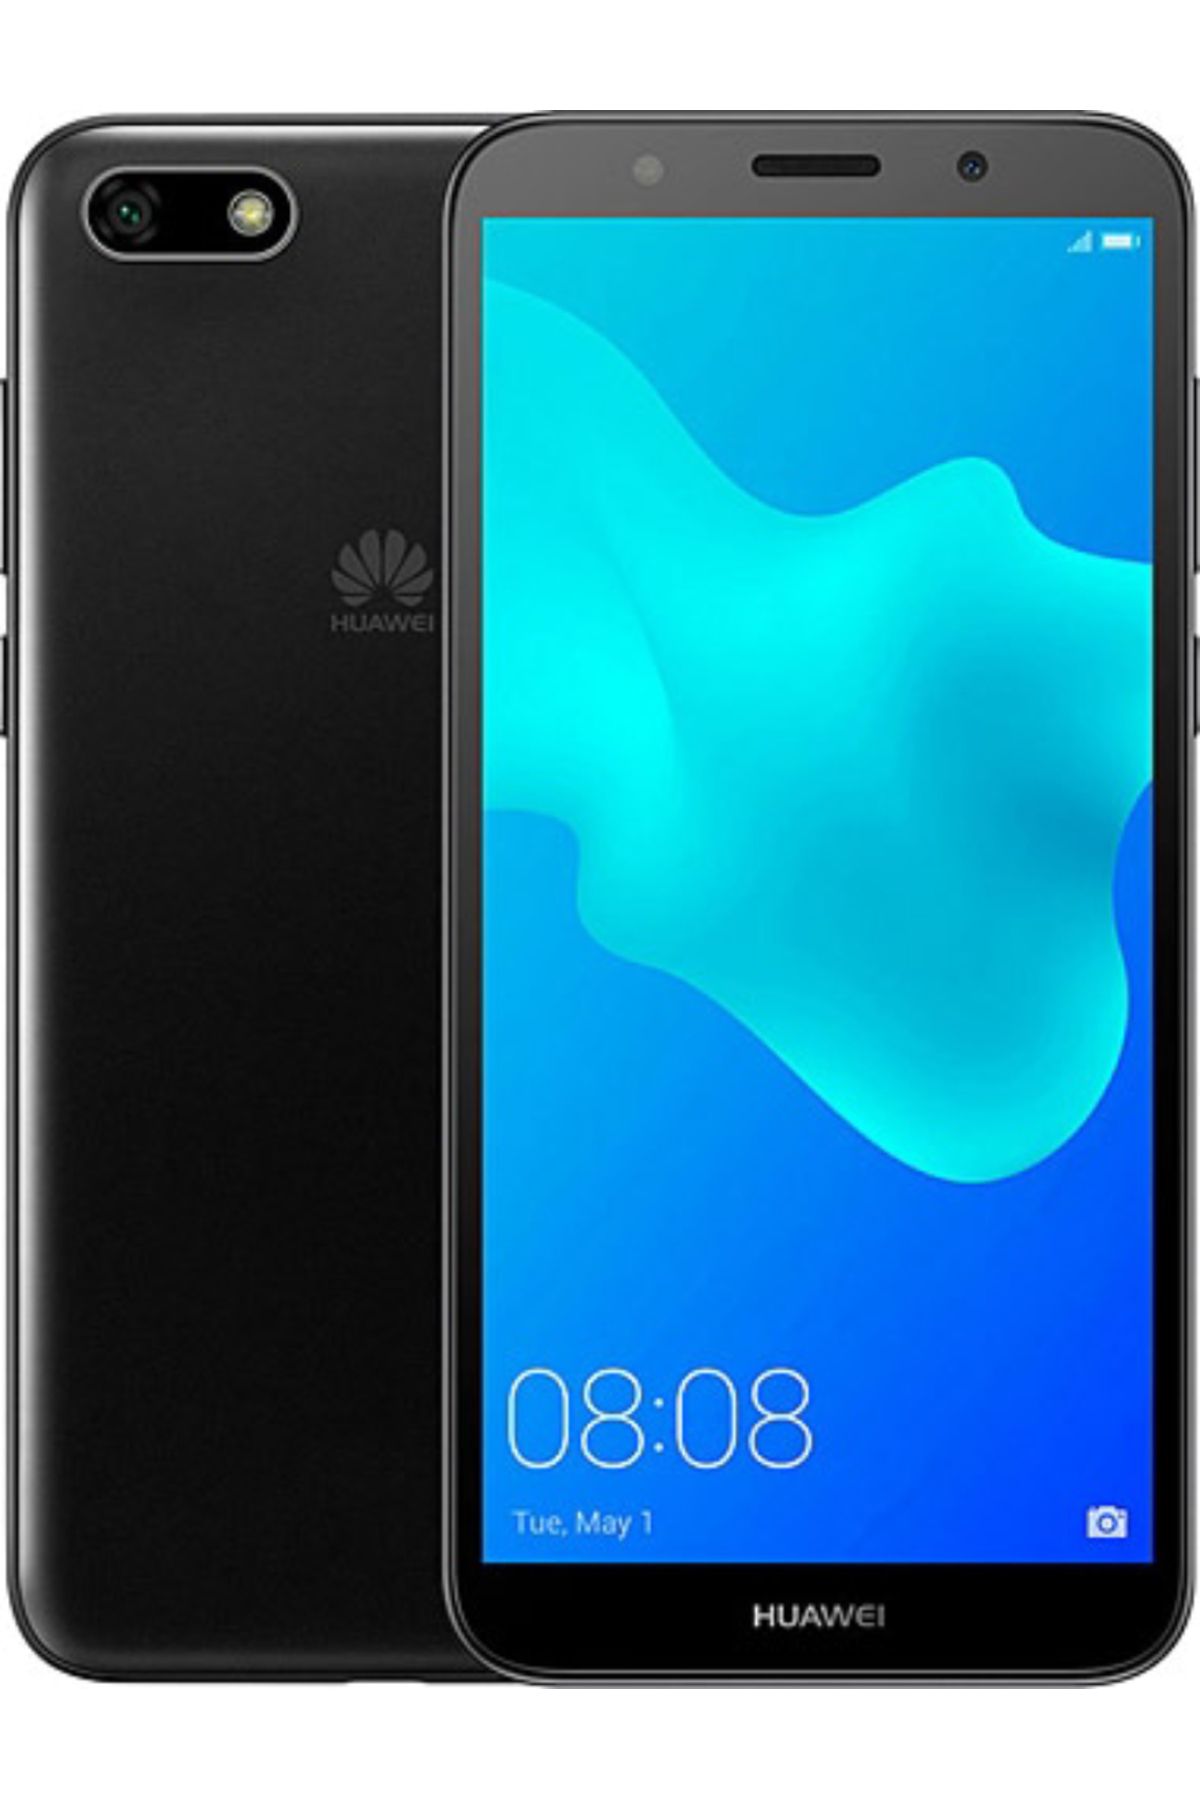 Huawei YENİLENMİŞ Huawei Y5 2018 16 GB Siyah Cep Telefonu B KALİTE